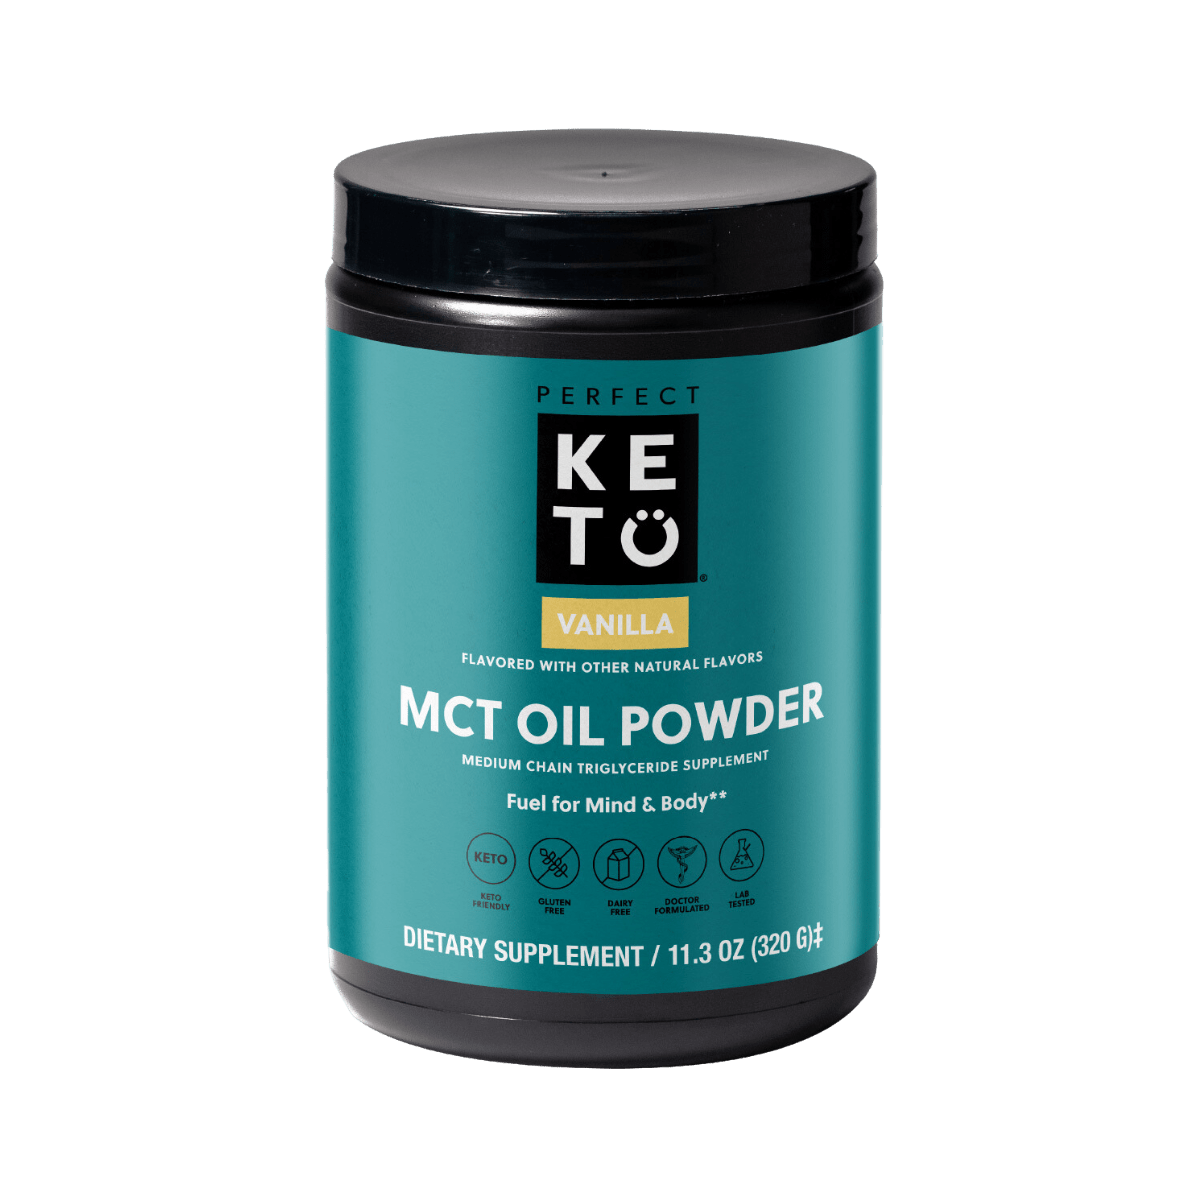 MCT Oil Powder - Wholesale Page